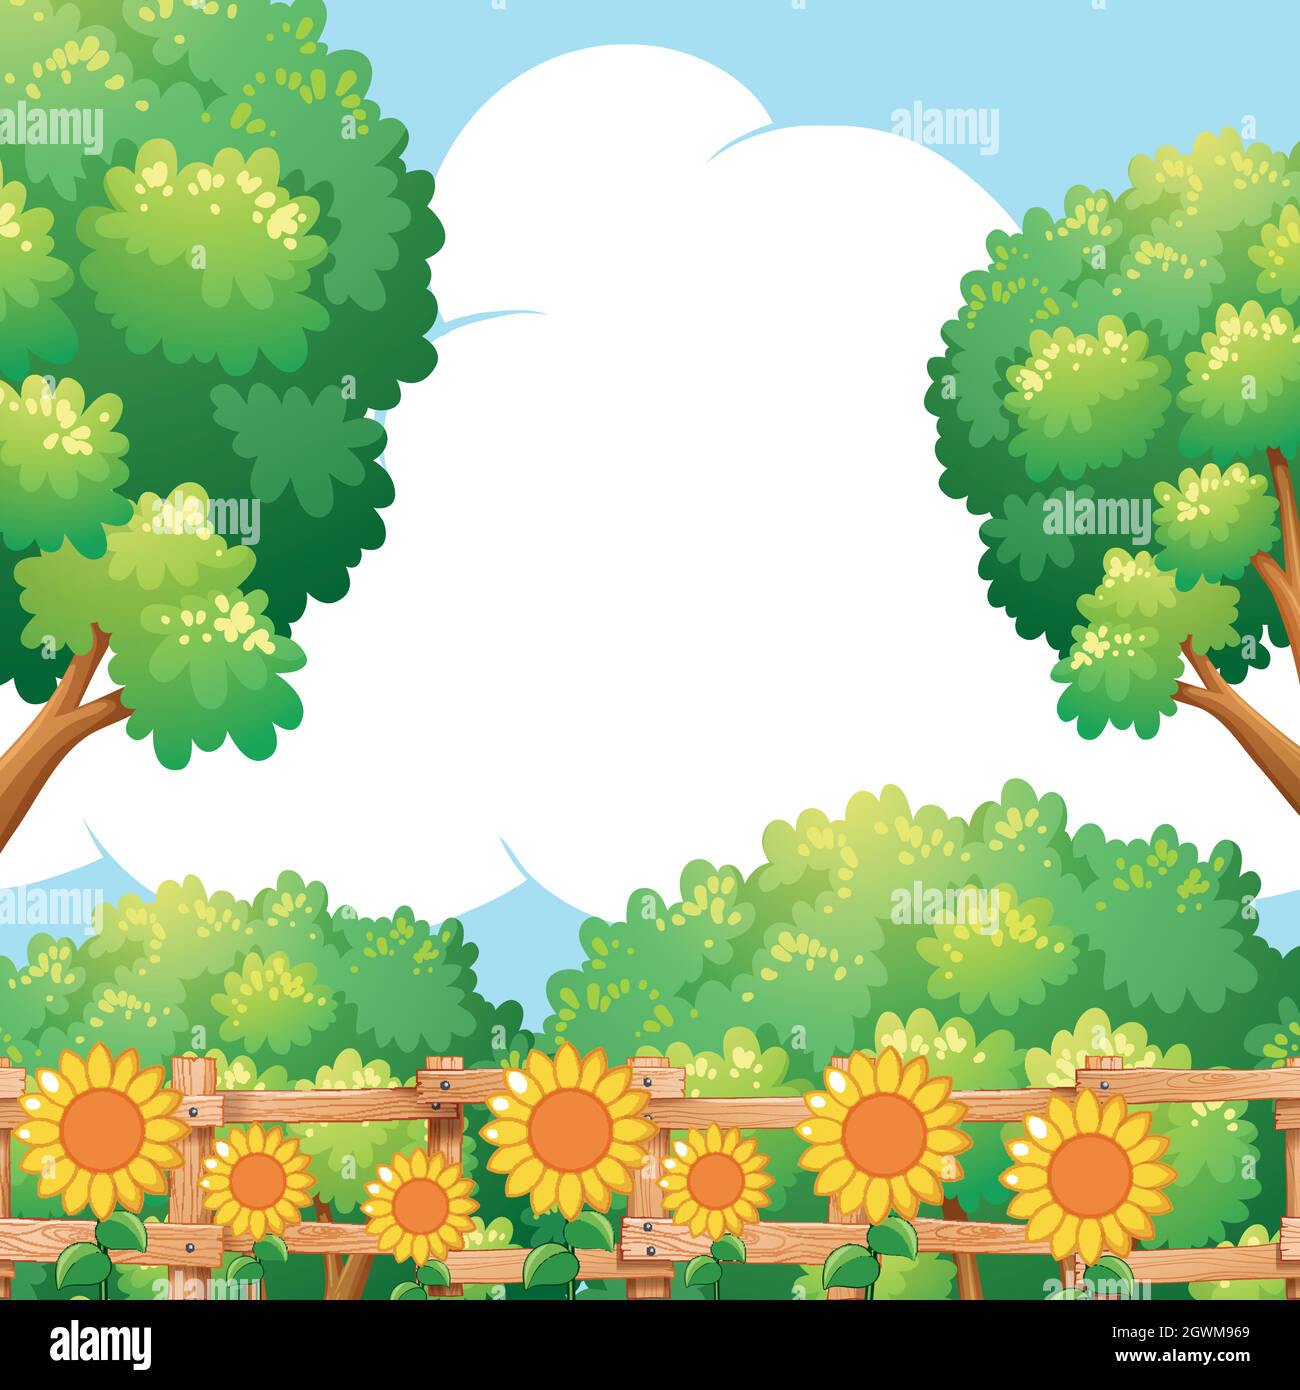 Background scene with sunflowers in garden Stock Vector Image & Art - Alamy